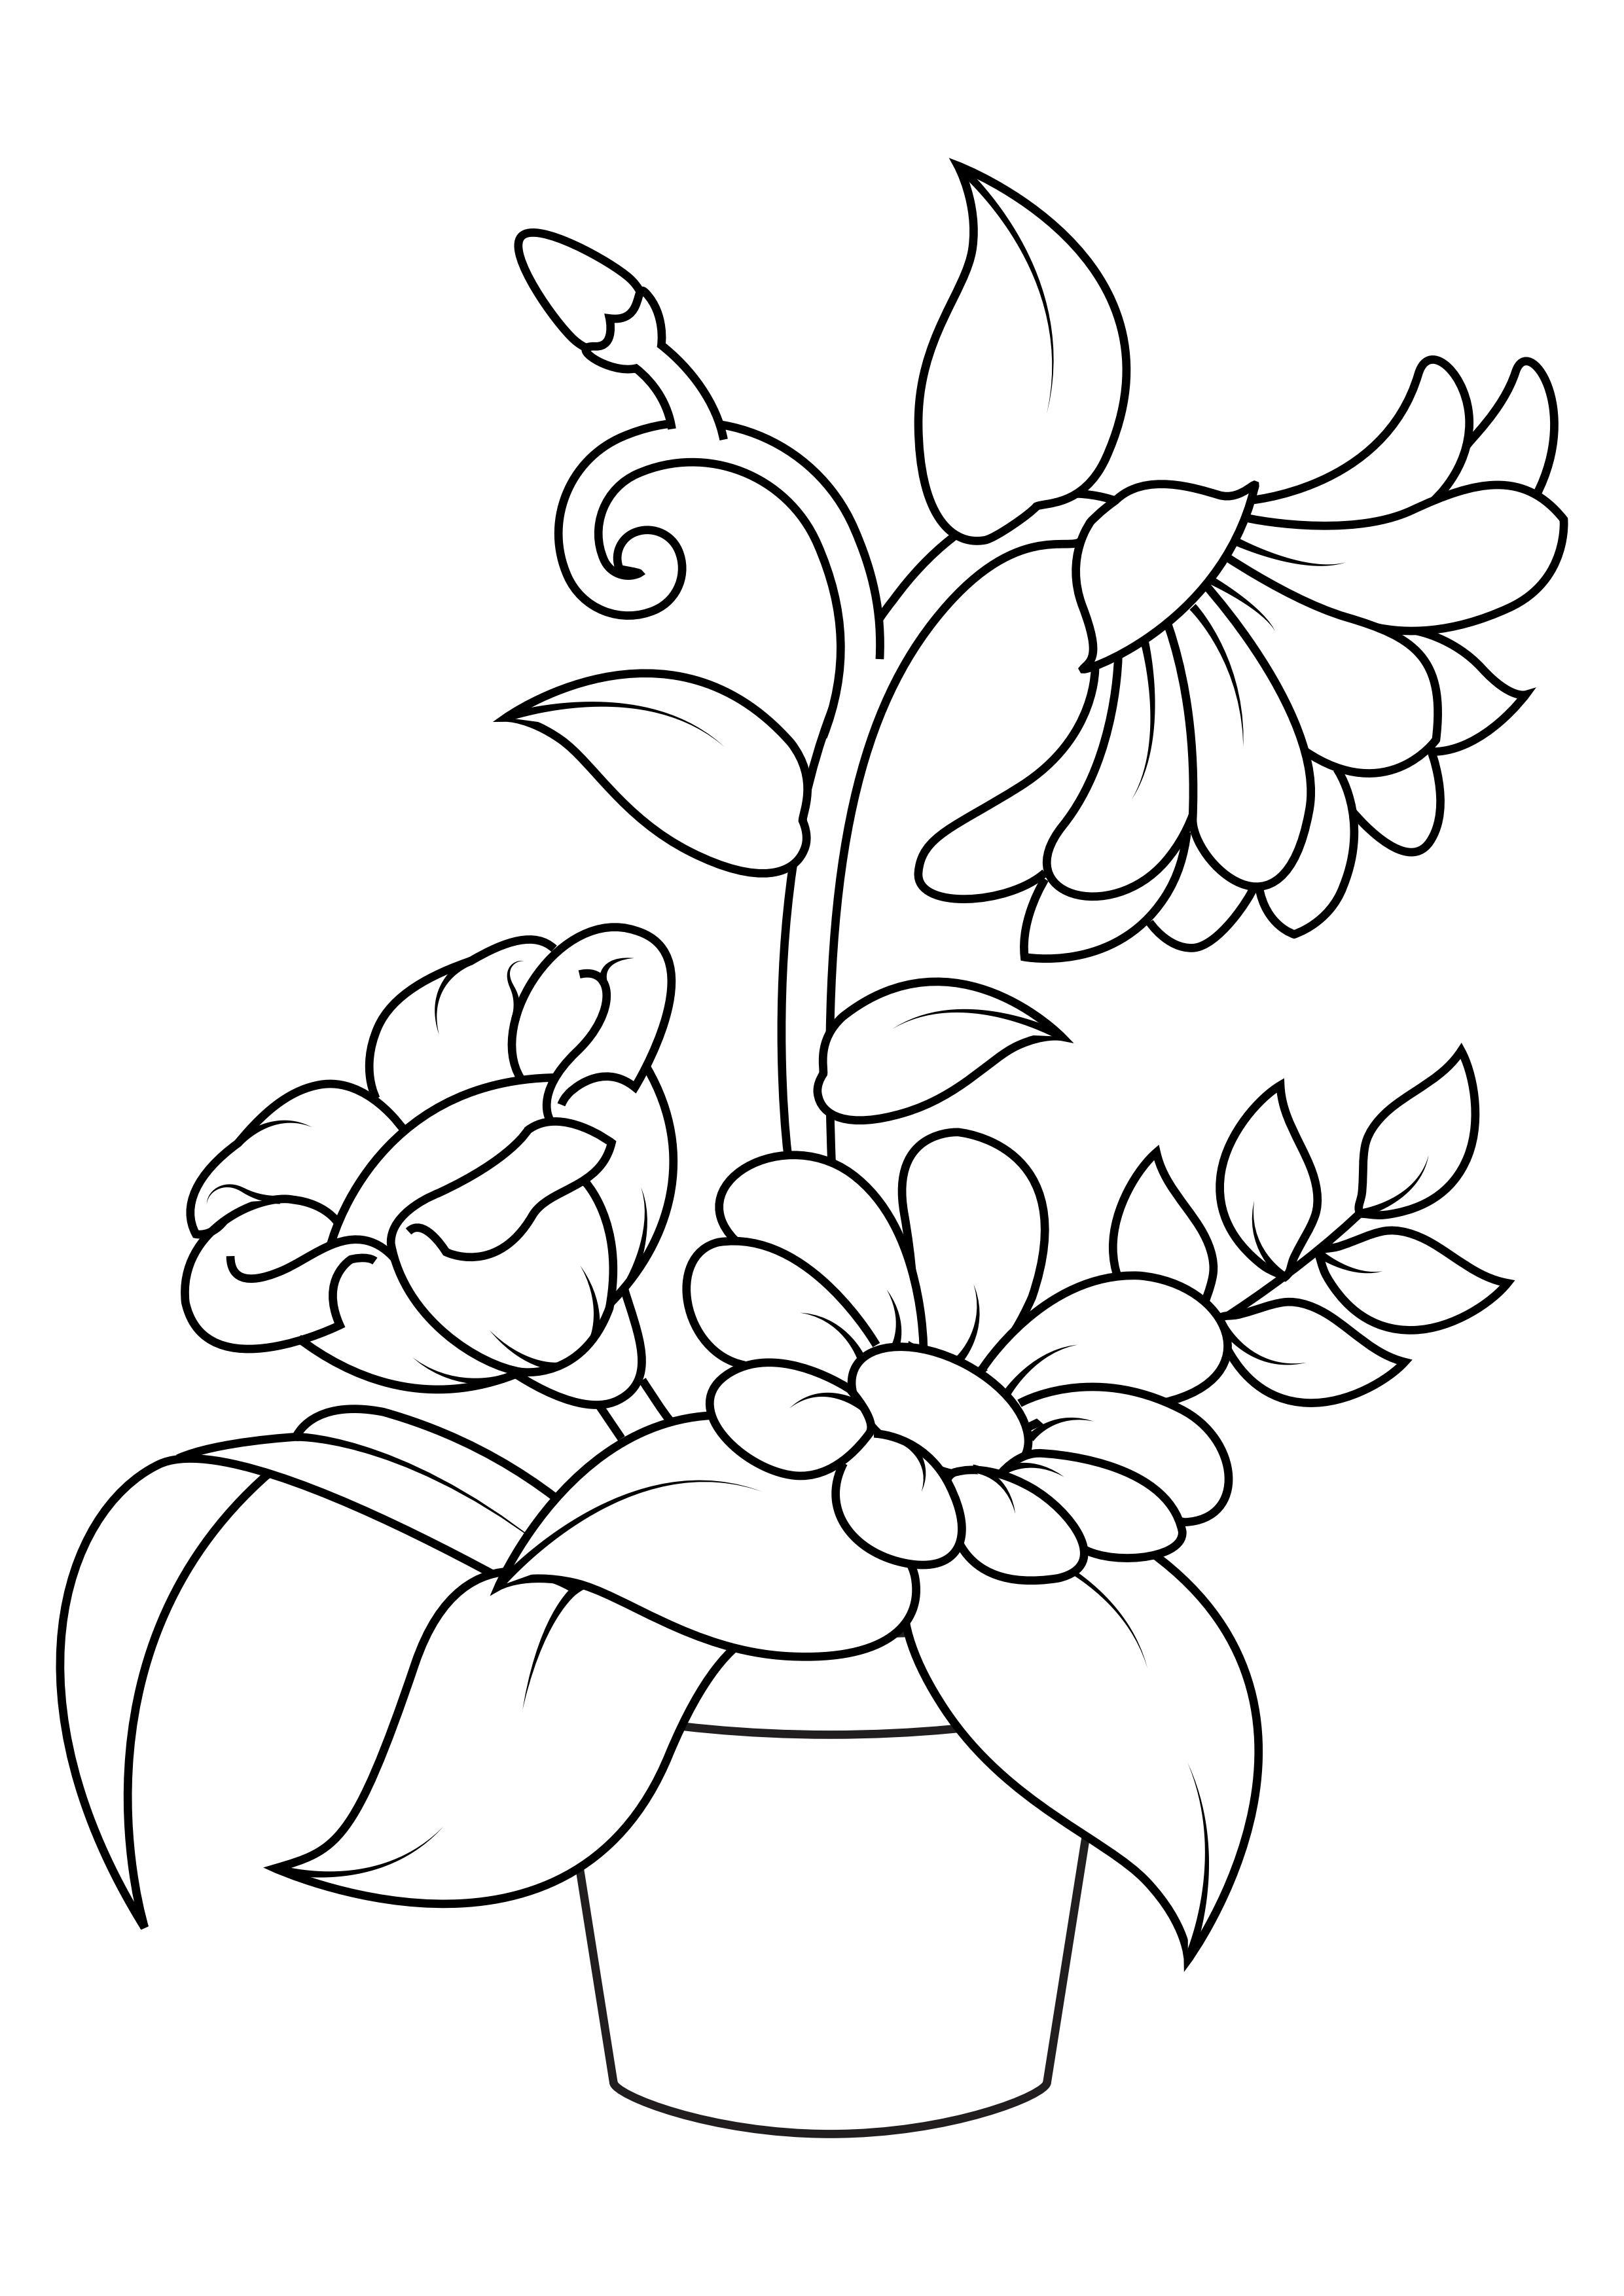 Dibujo para colorear flores